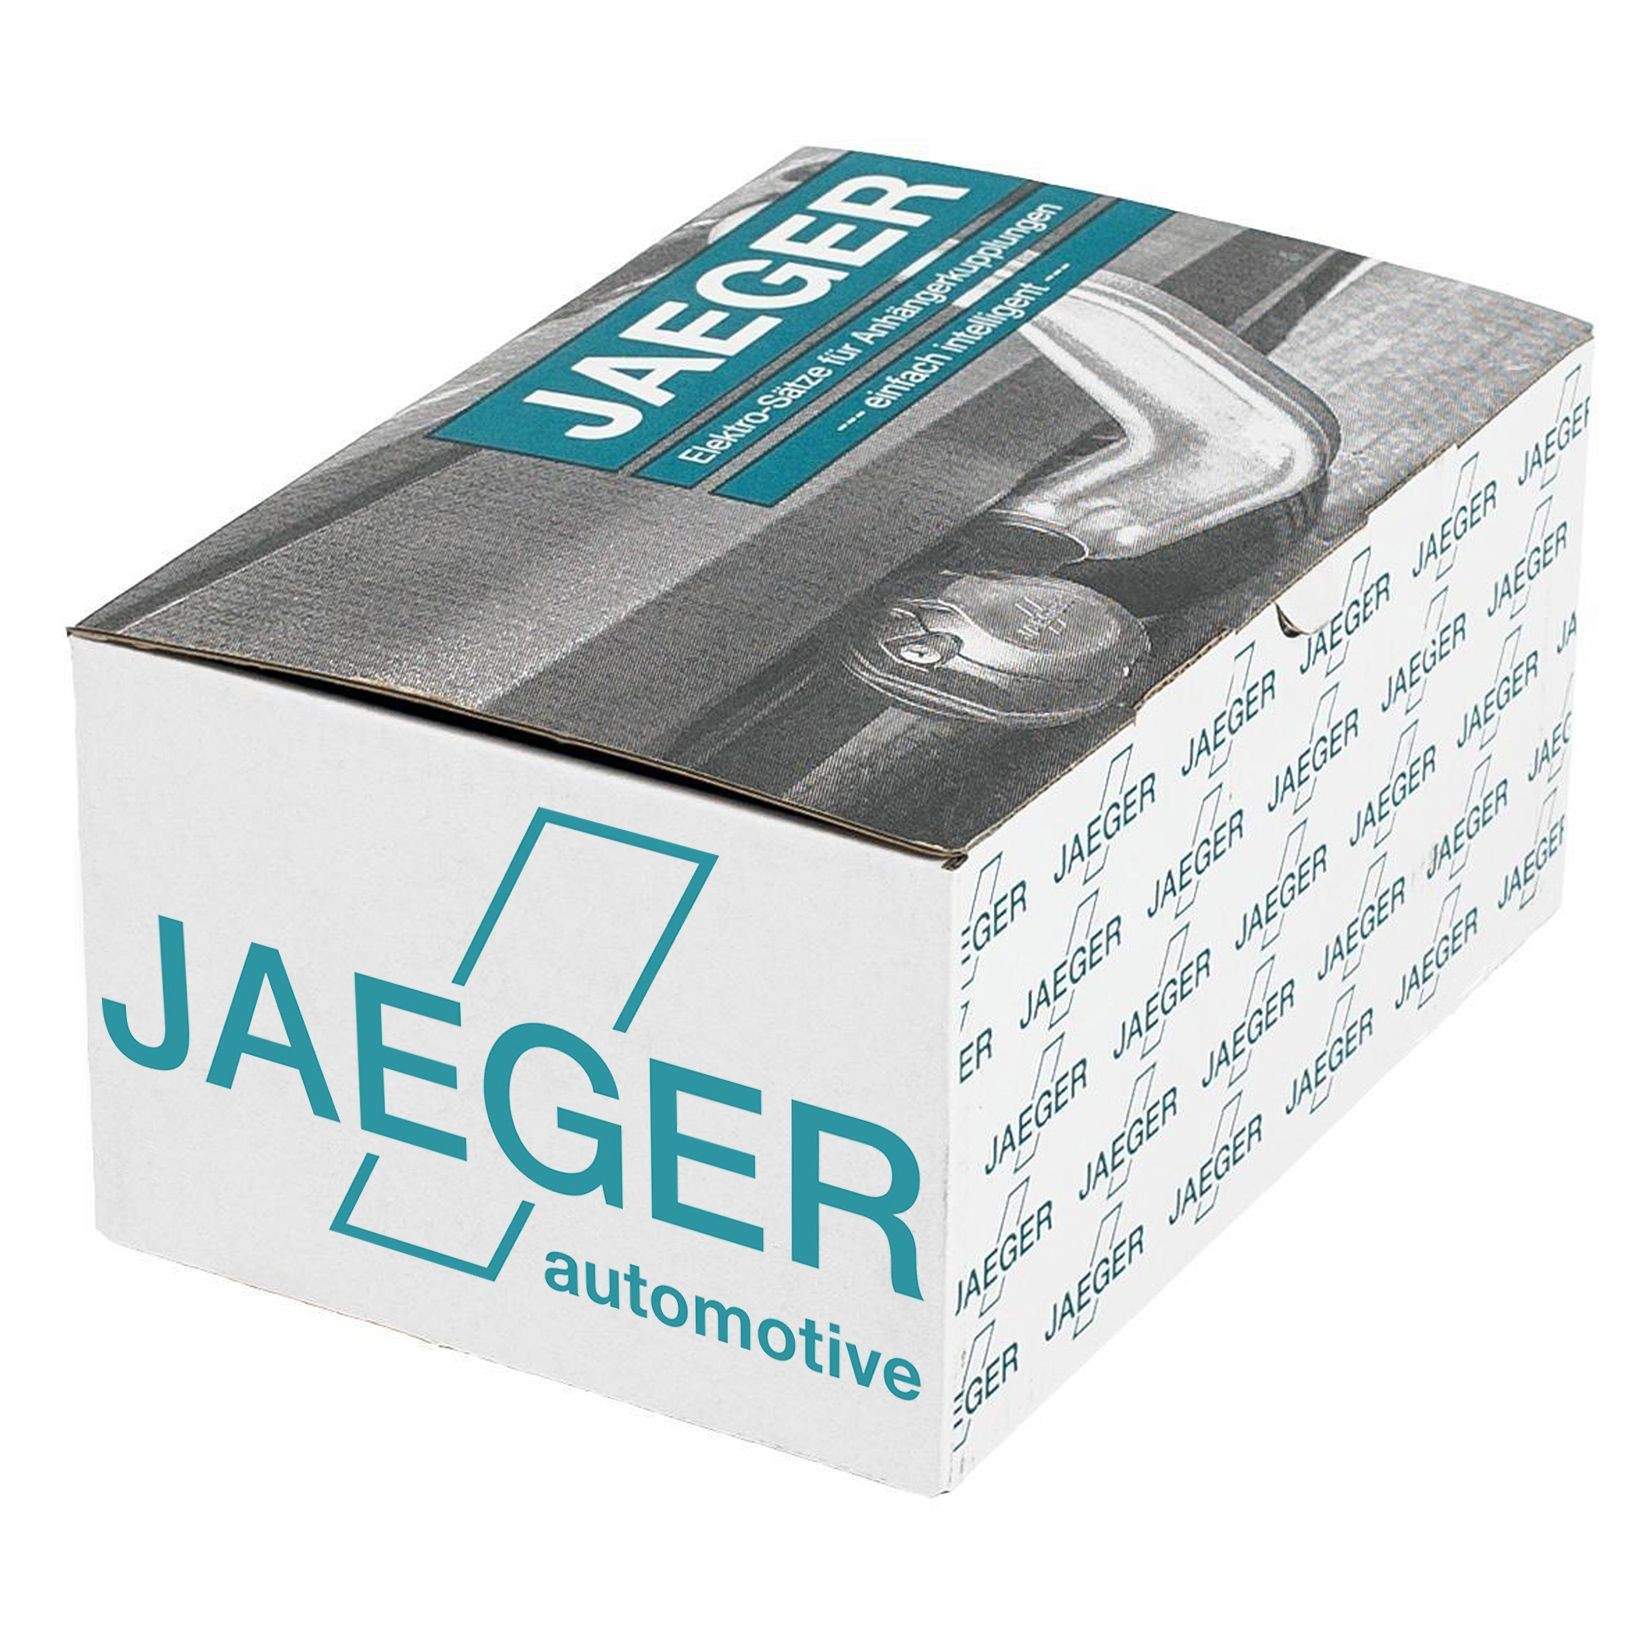 Nissan QUEST Towbar electric kit JAEGER 21140523 cheap